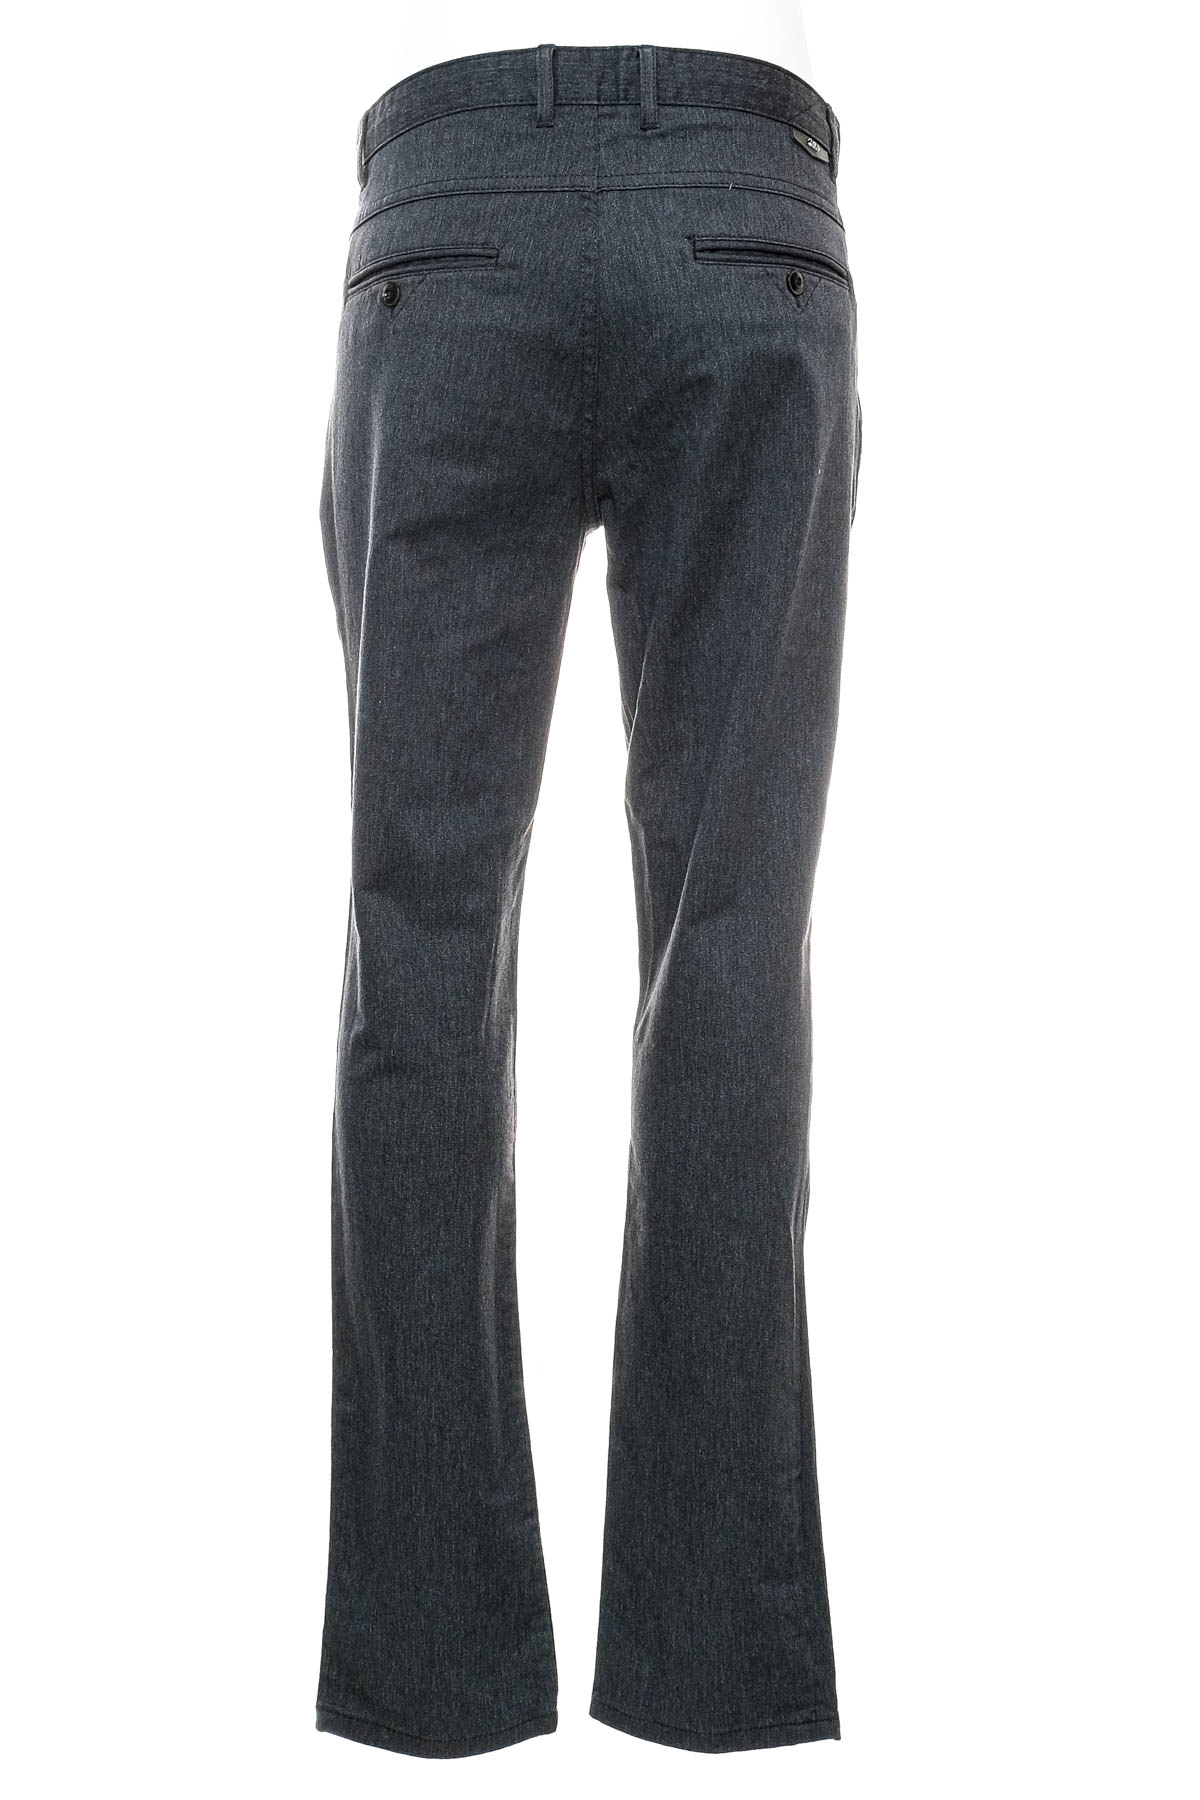 Pantalon pentru bărbați - ZARA - 1